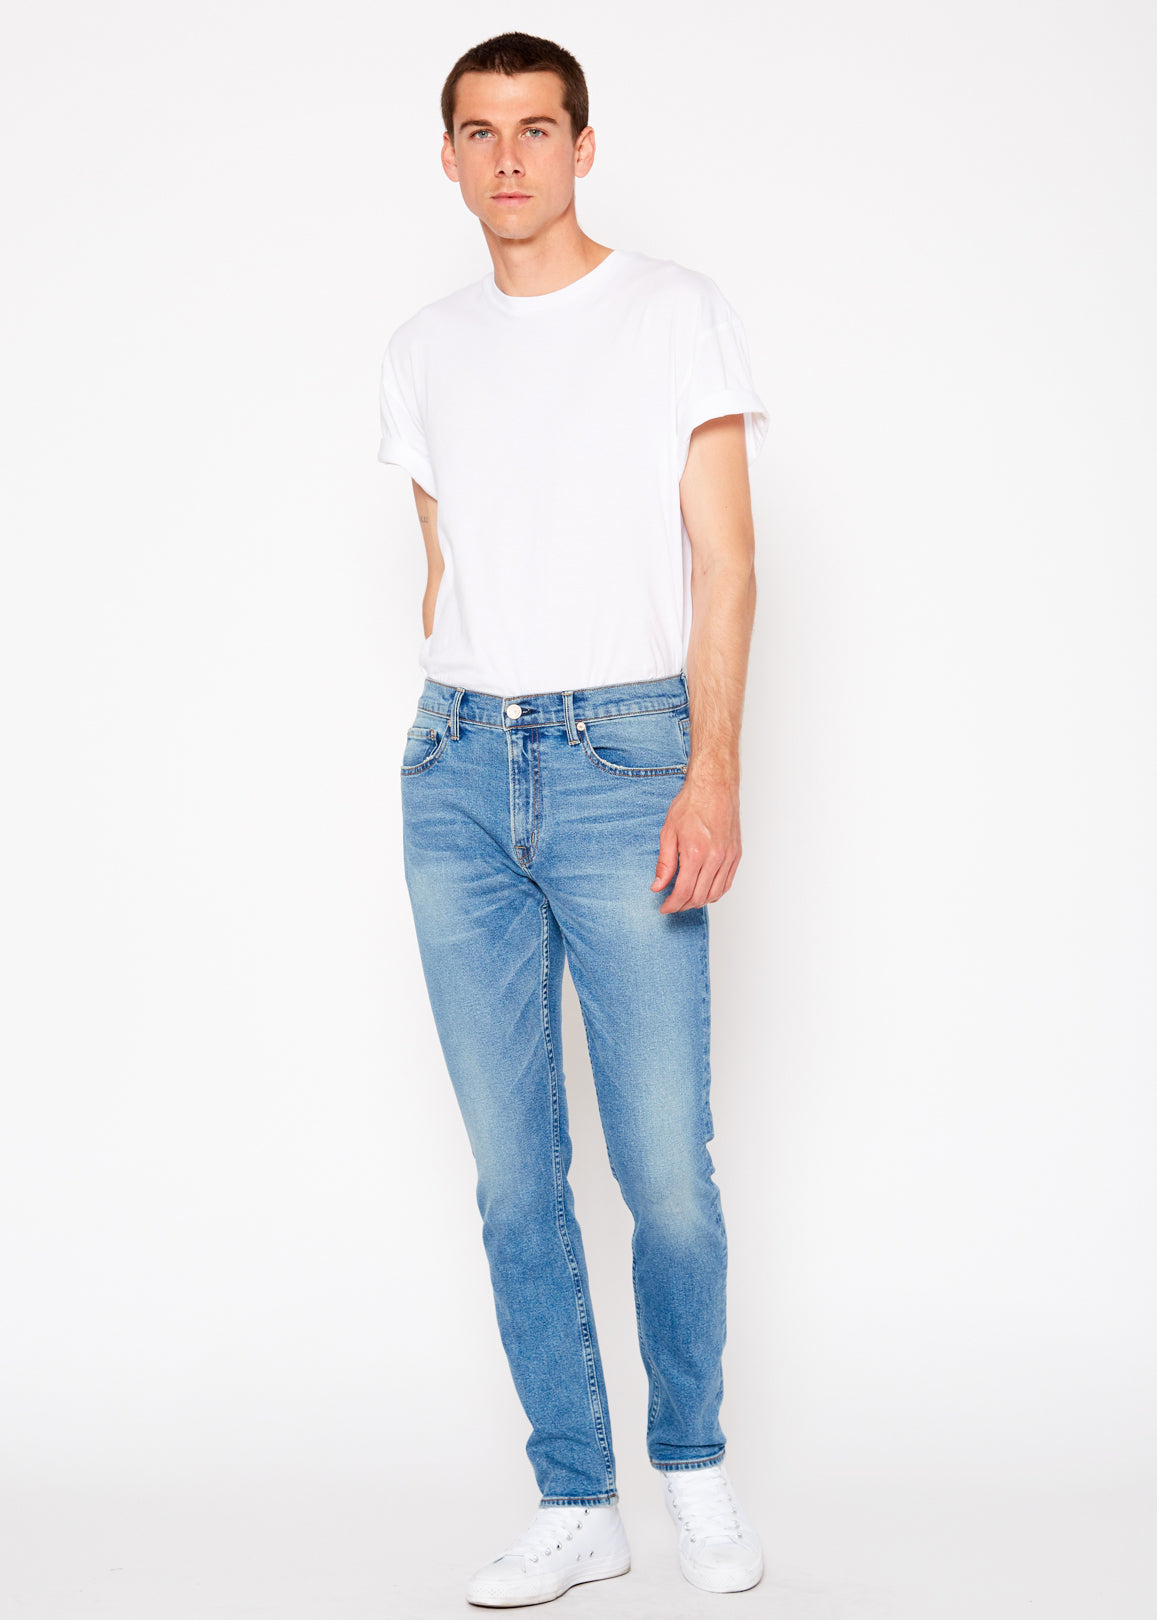 Men's 32 Inseam Harrison Stretch Skinny Jeans In Indigo Blue - Noend Denim